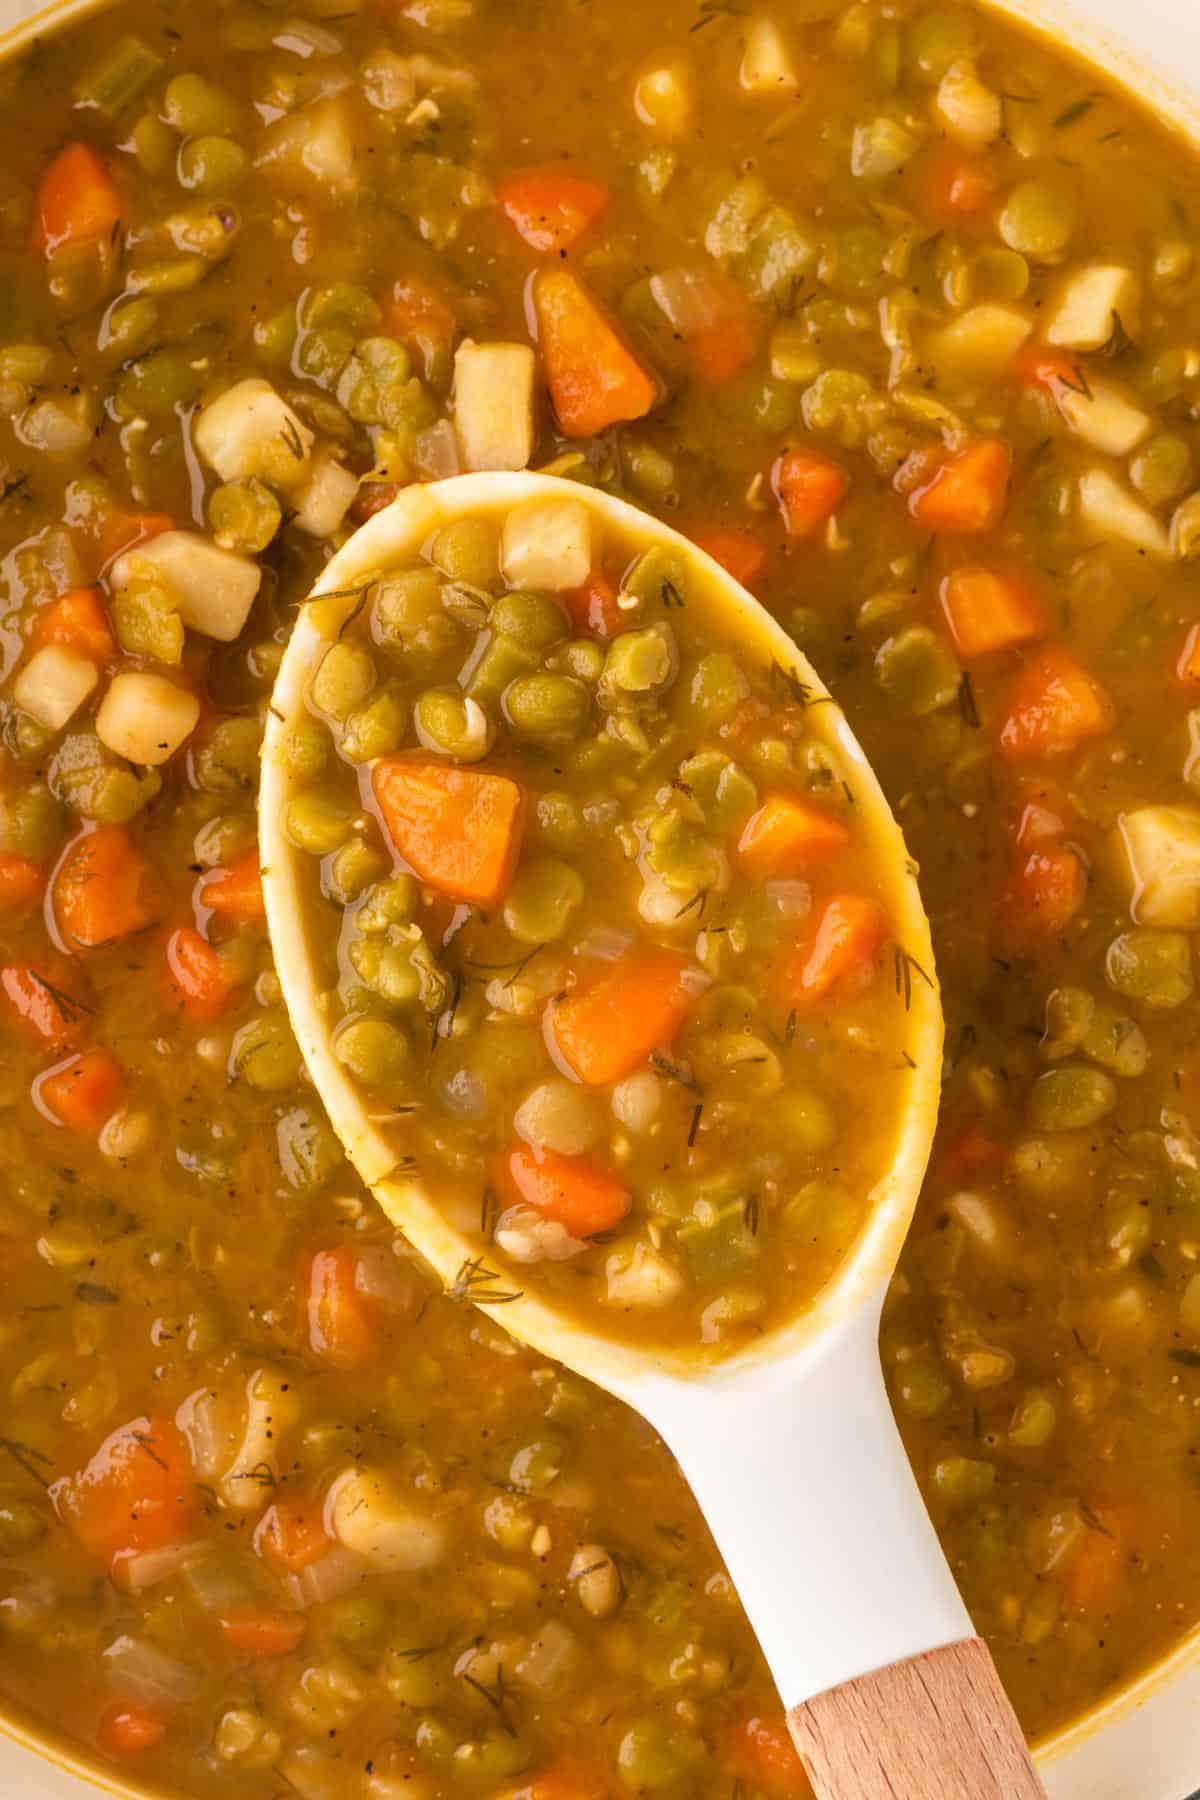 A photo of a spoonula full of split pea soup.